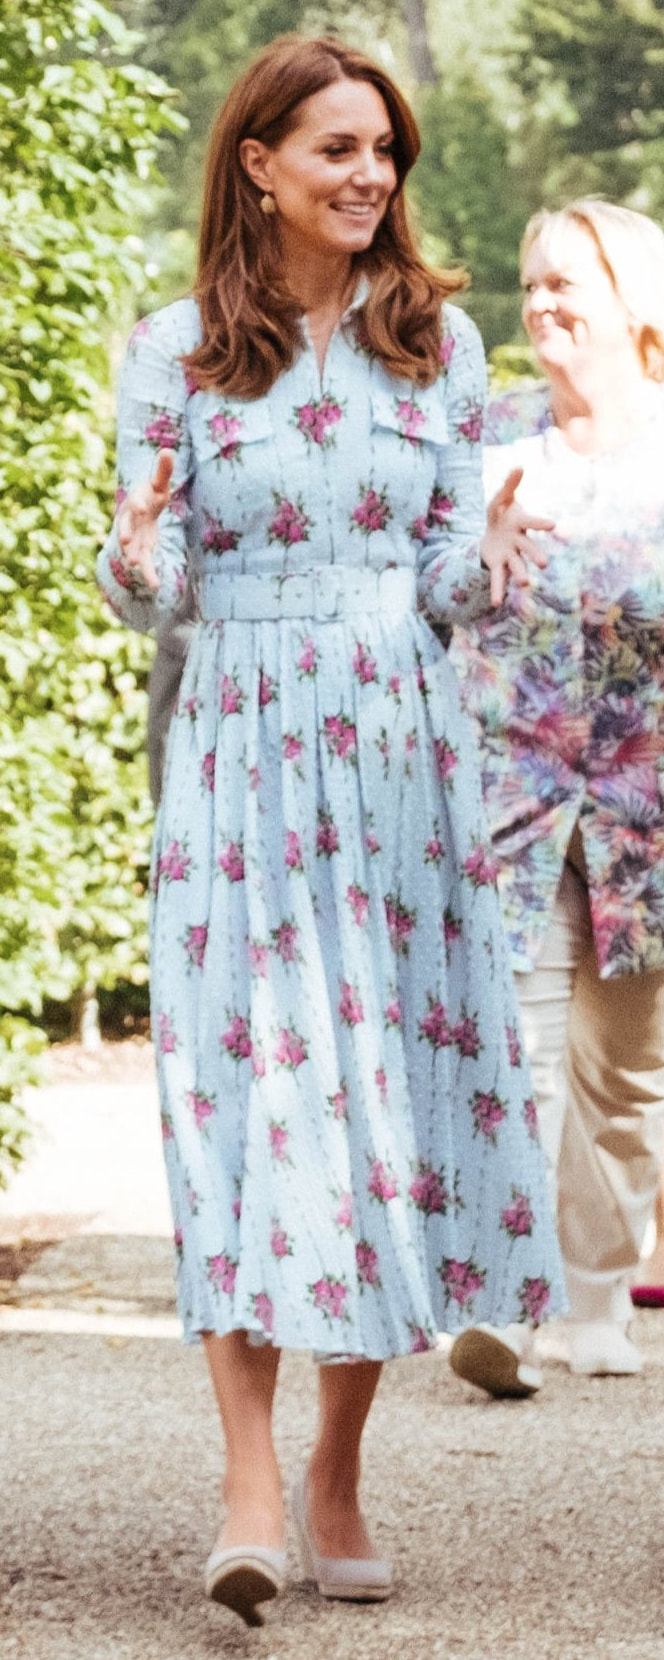 Emilia Wickstead Aurora Floral-Print Dress as seen on Kate Middleton, The Duchess of Cambridge.